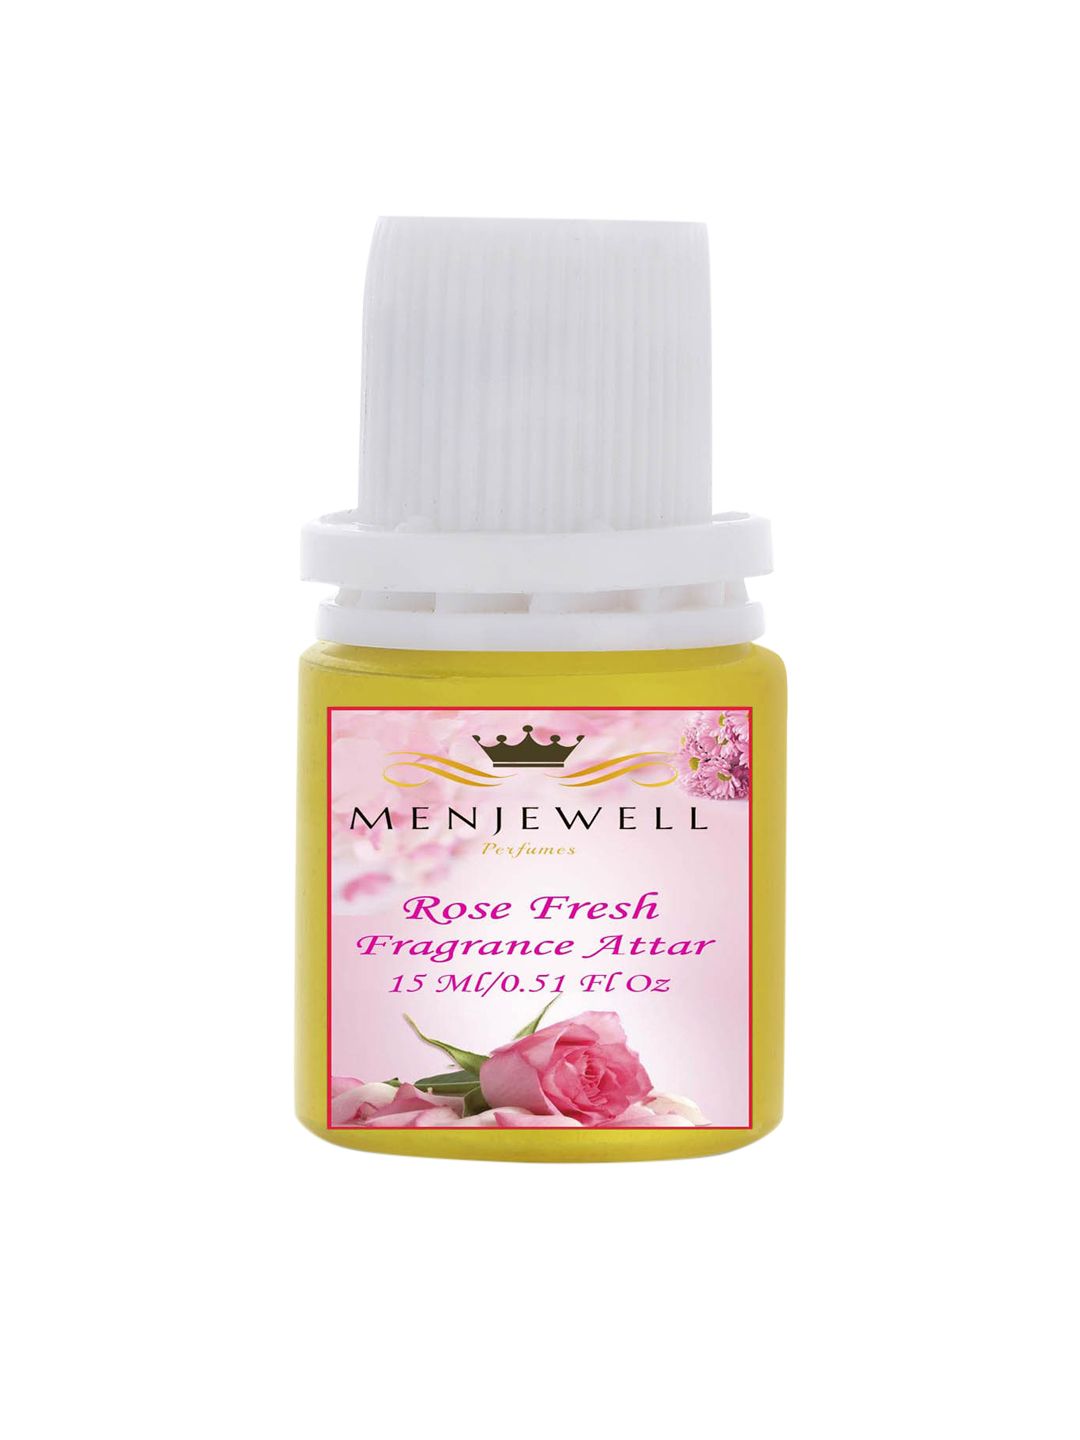 Menjewell Rose Fresh Fragrance Long Lasting Perfume 15ml Price in India